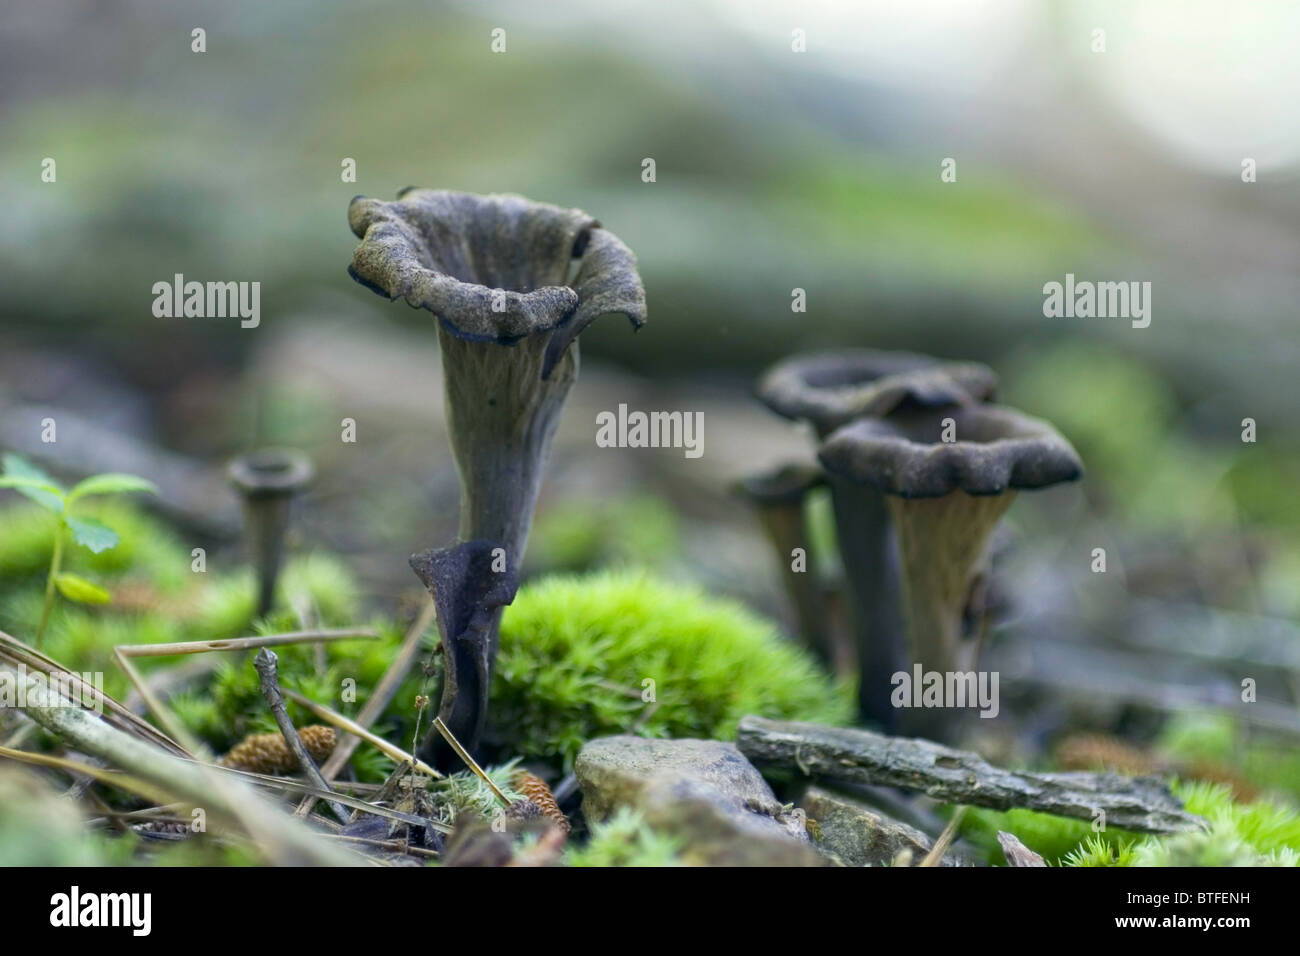 Black chanterelle mushrooms on the forest floor. Stock Photo